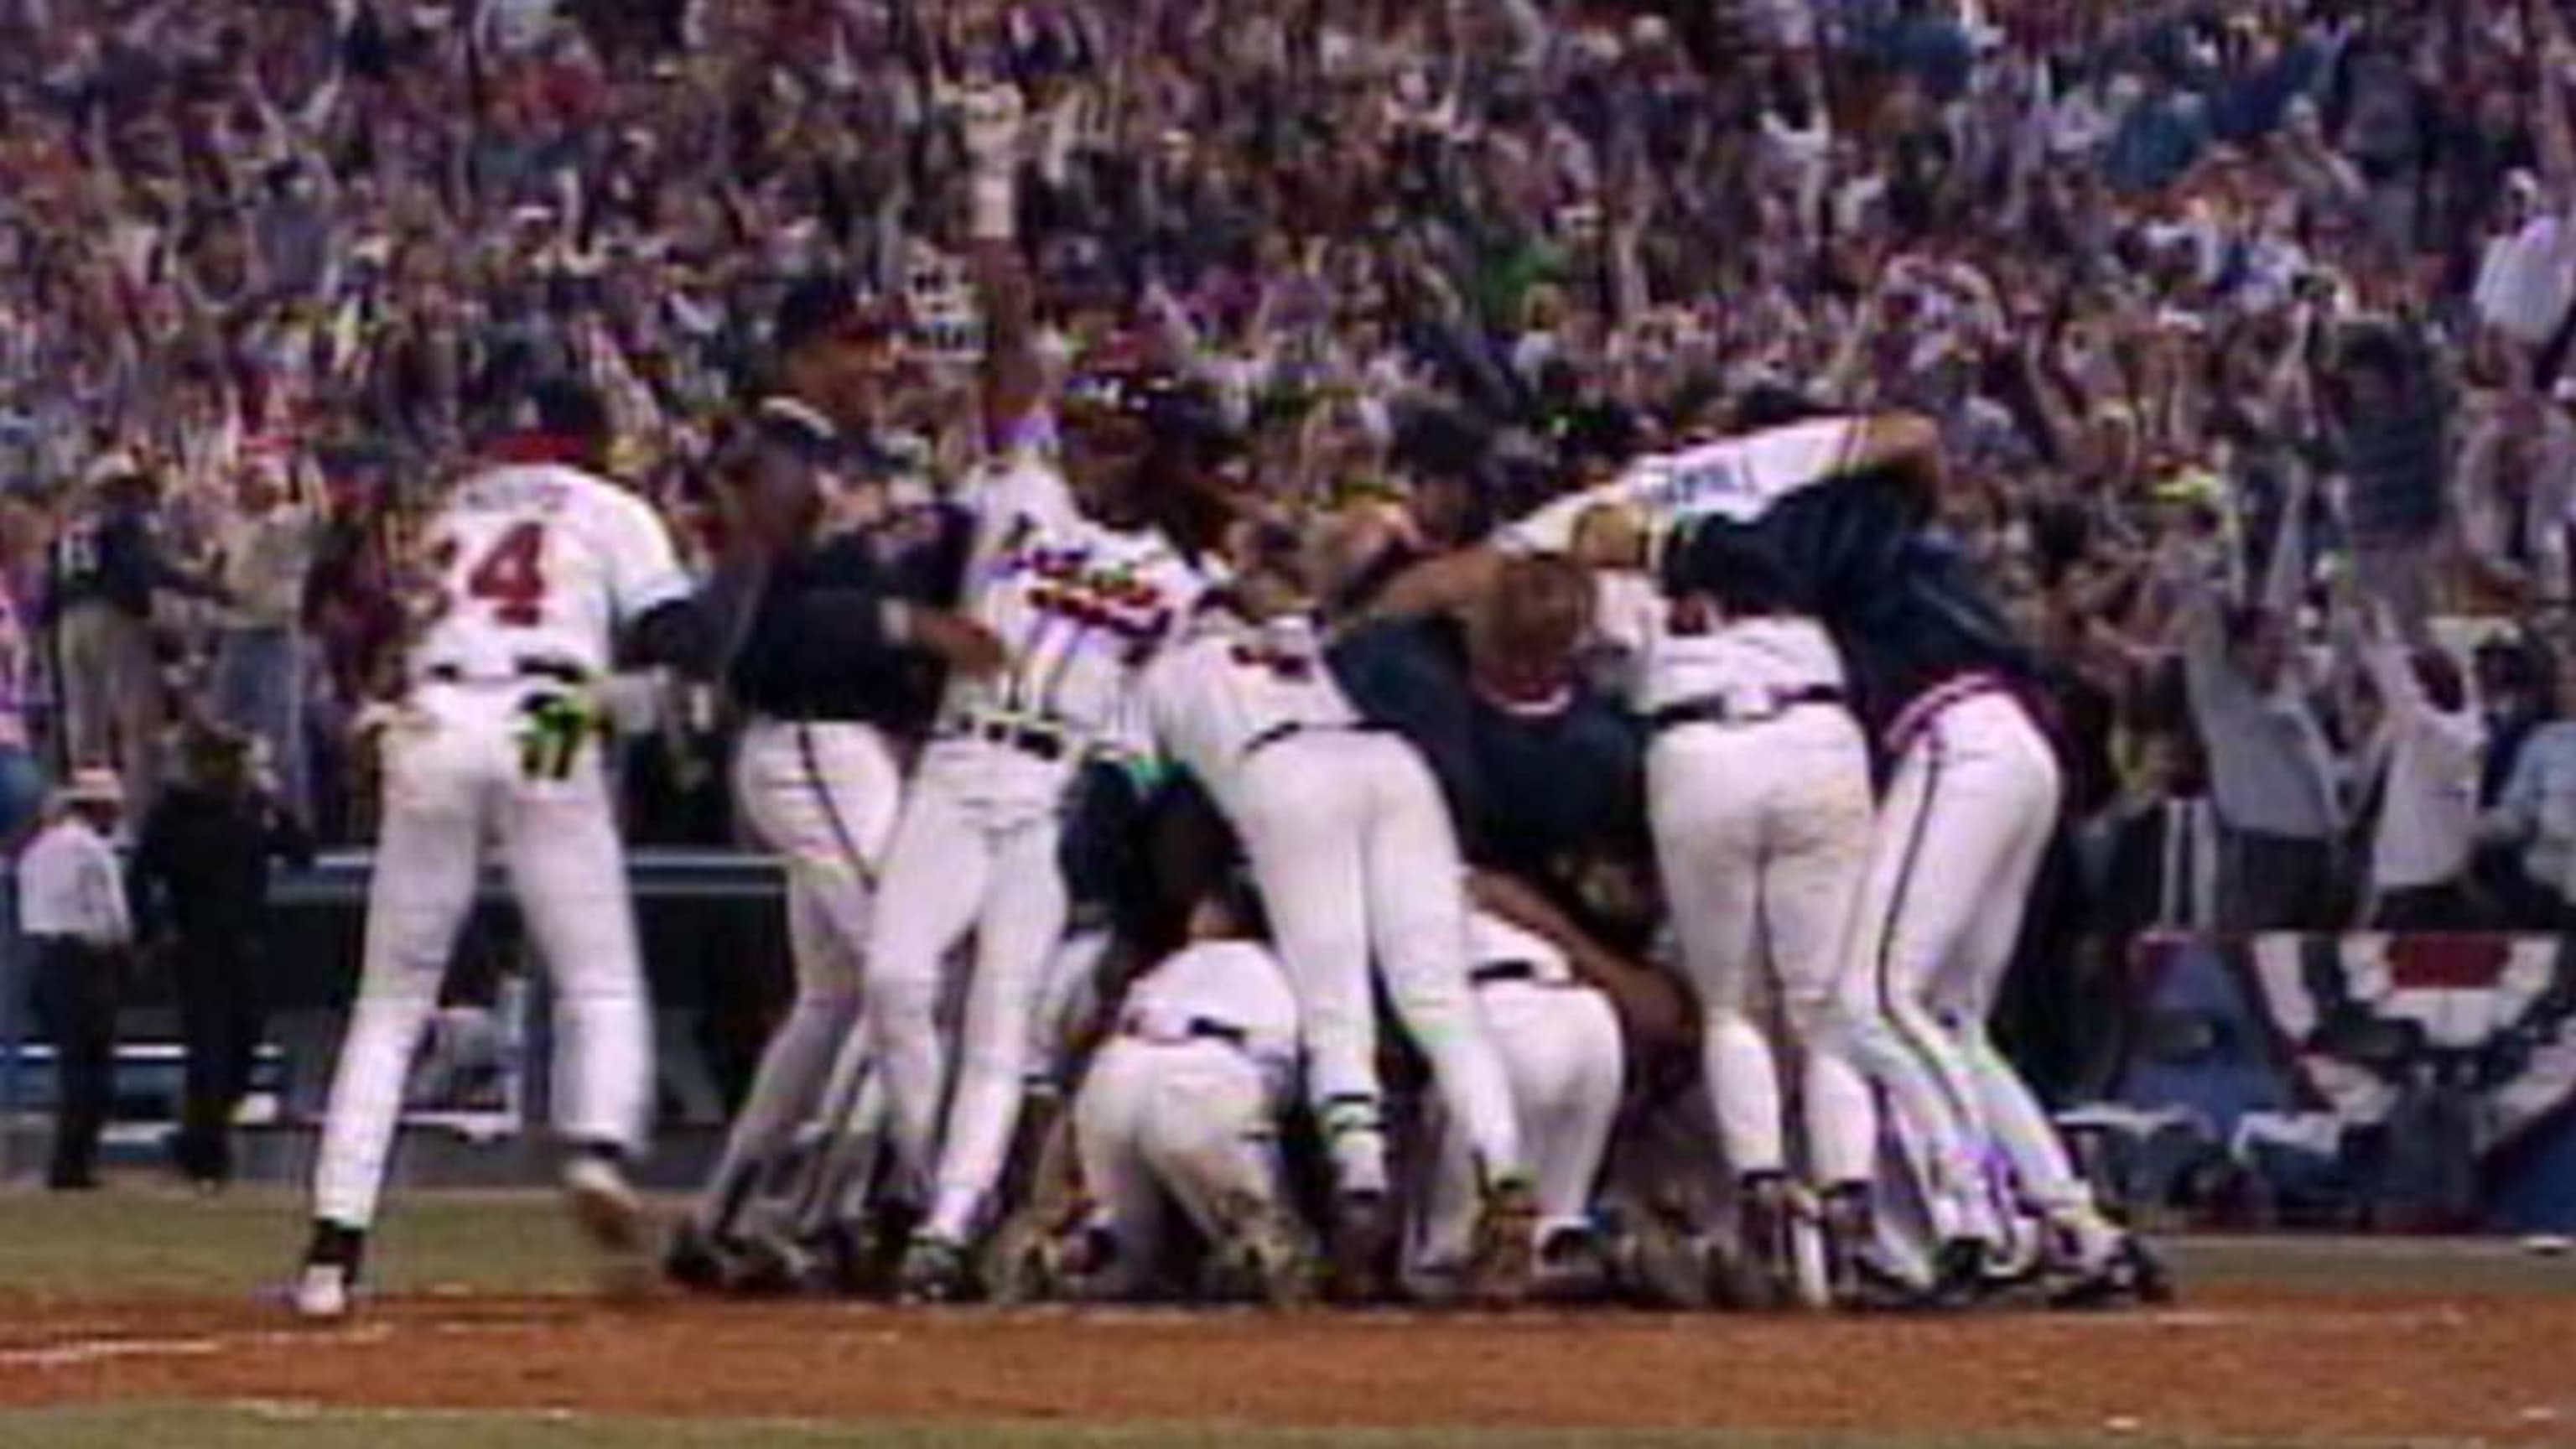 Pirates vs Braves (1992 NLCS Game 1) 